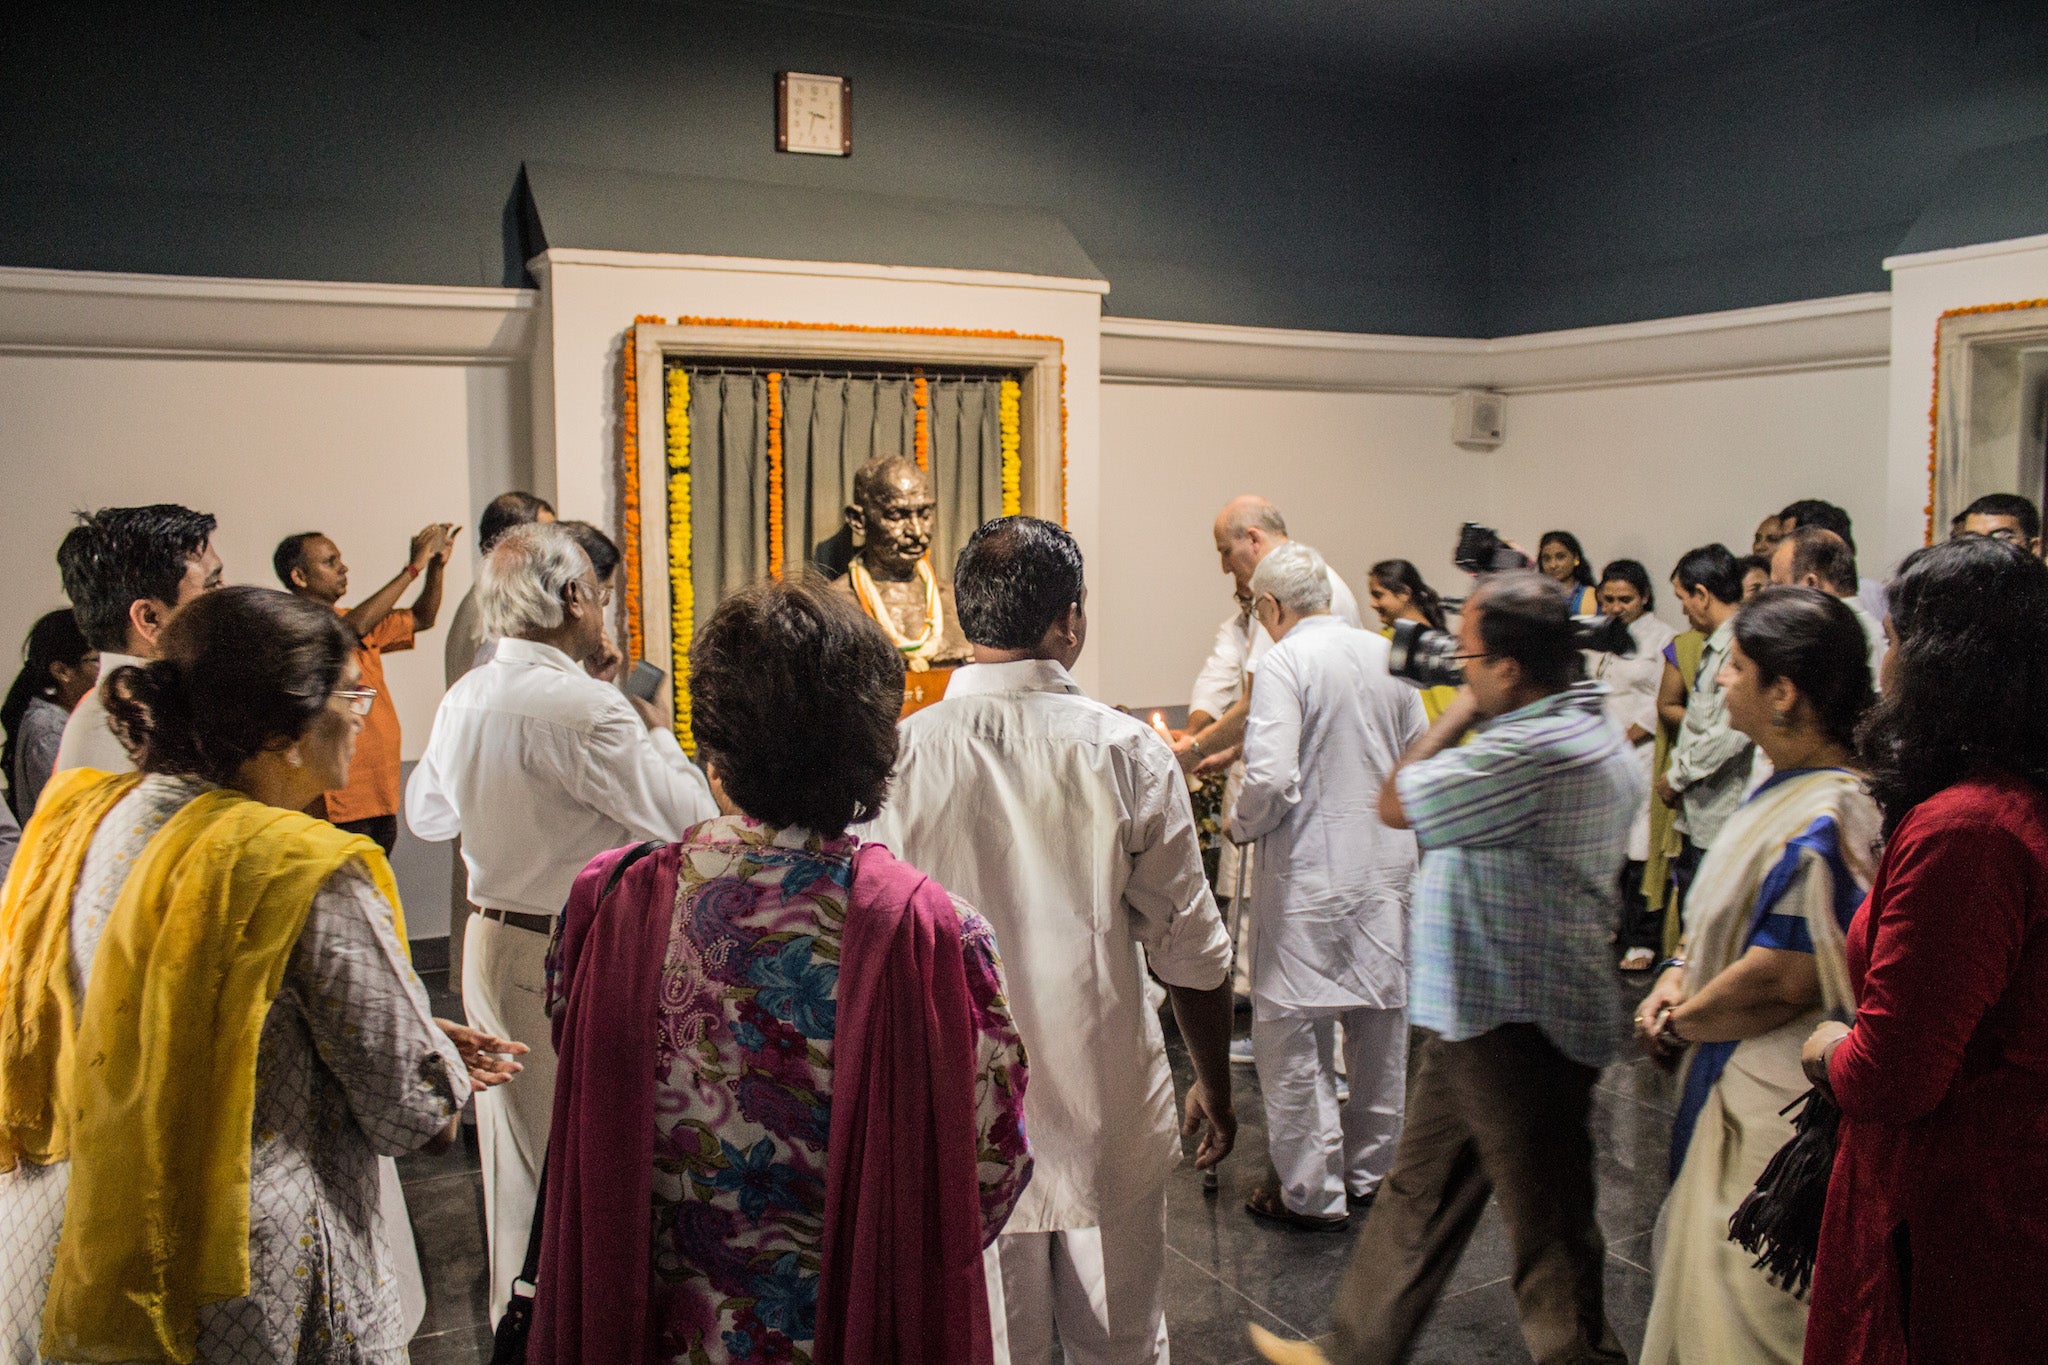 The National Gandhi Museum in Delhi begins its commemorations marking Gandhi’s 150th birthday